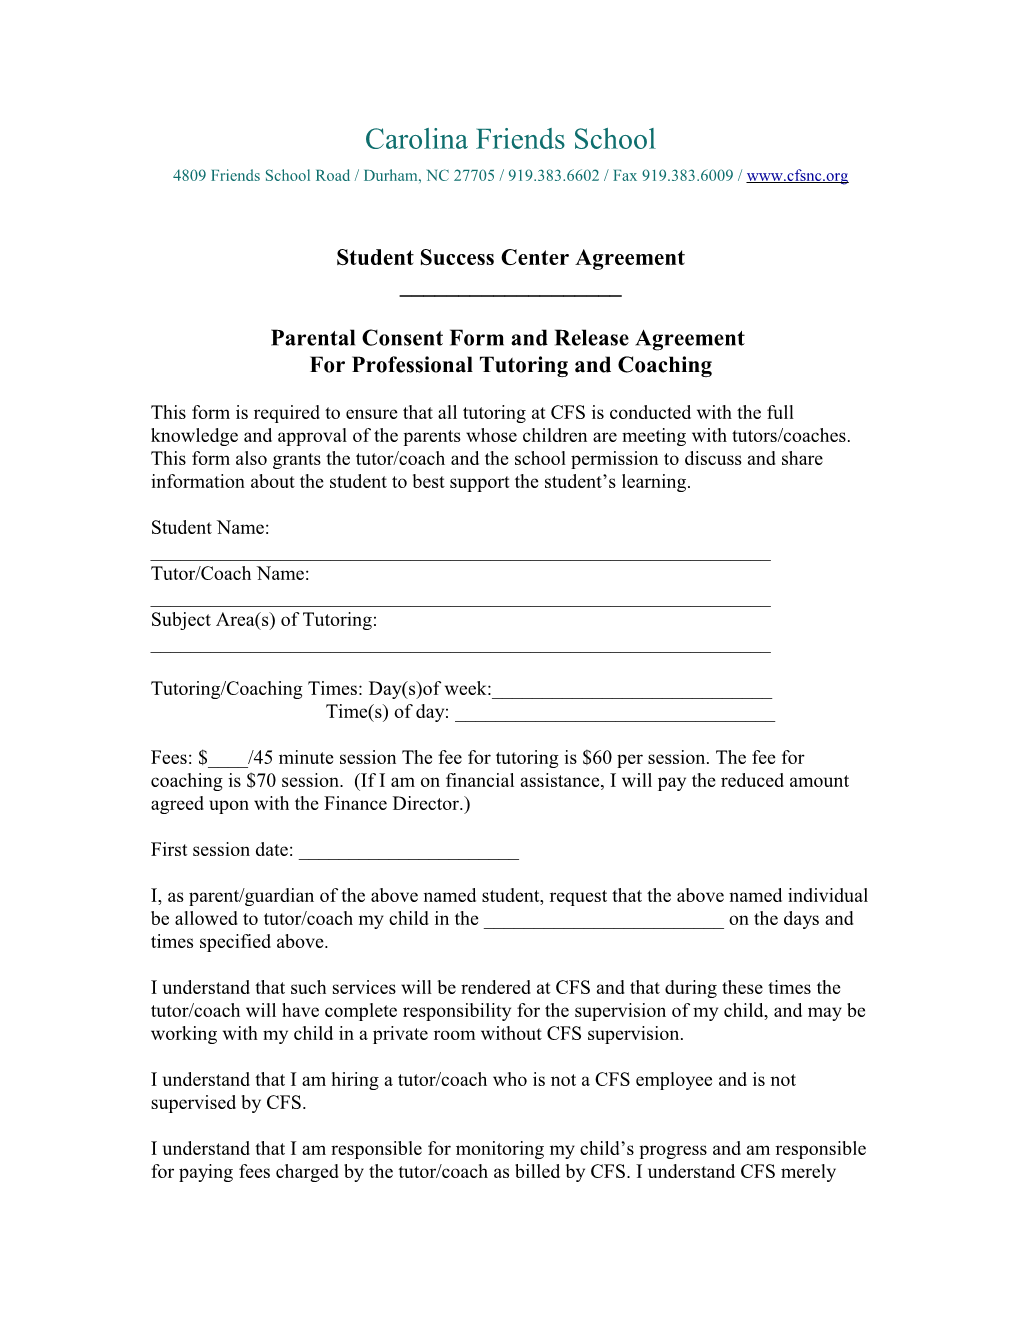 Student Success Center Agreement